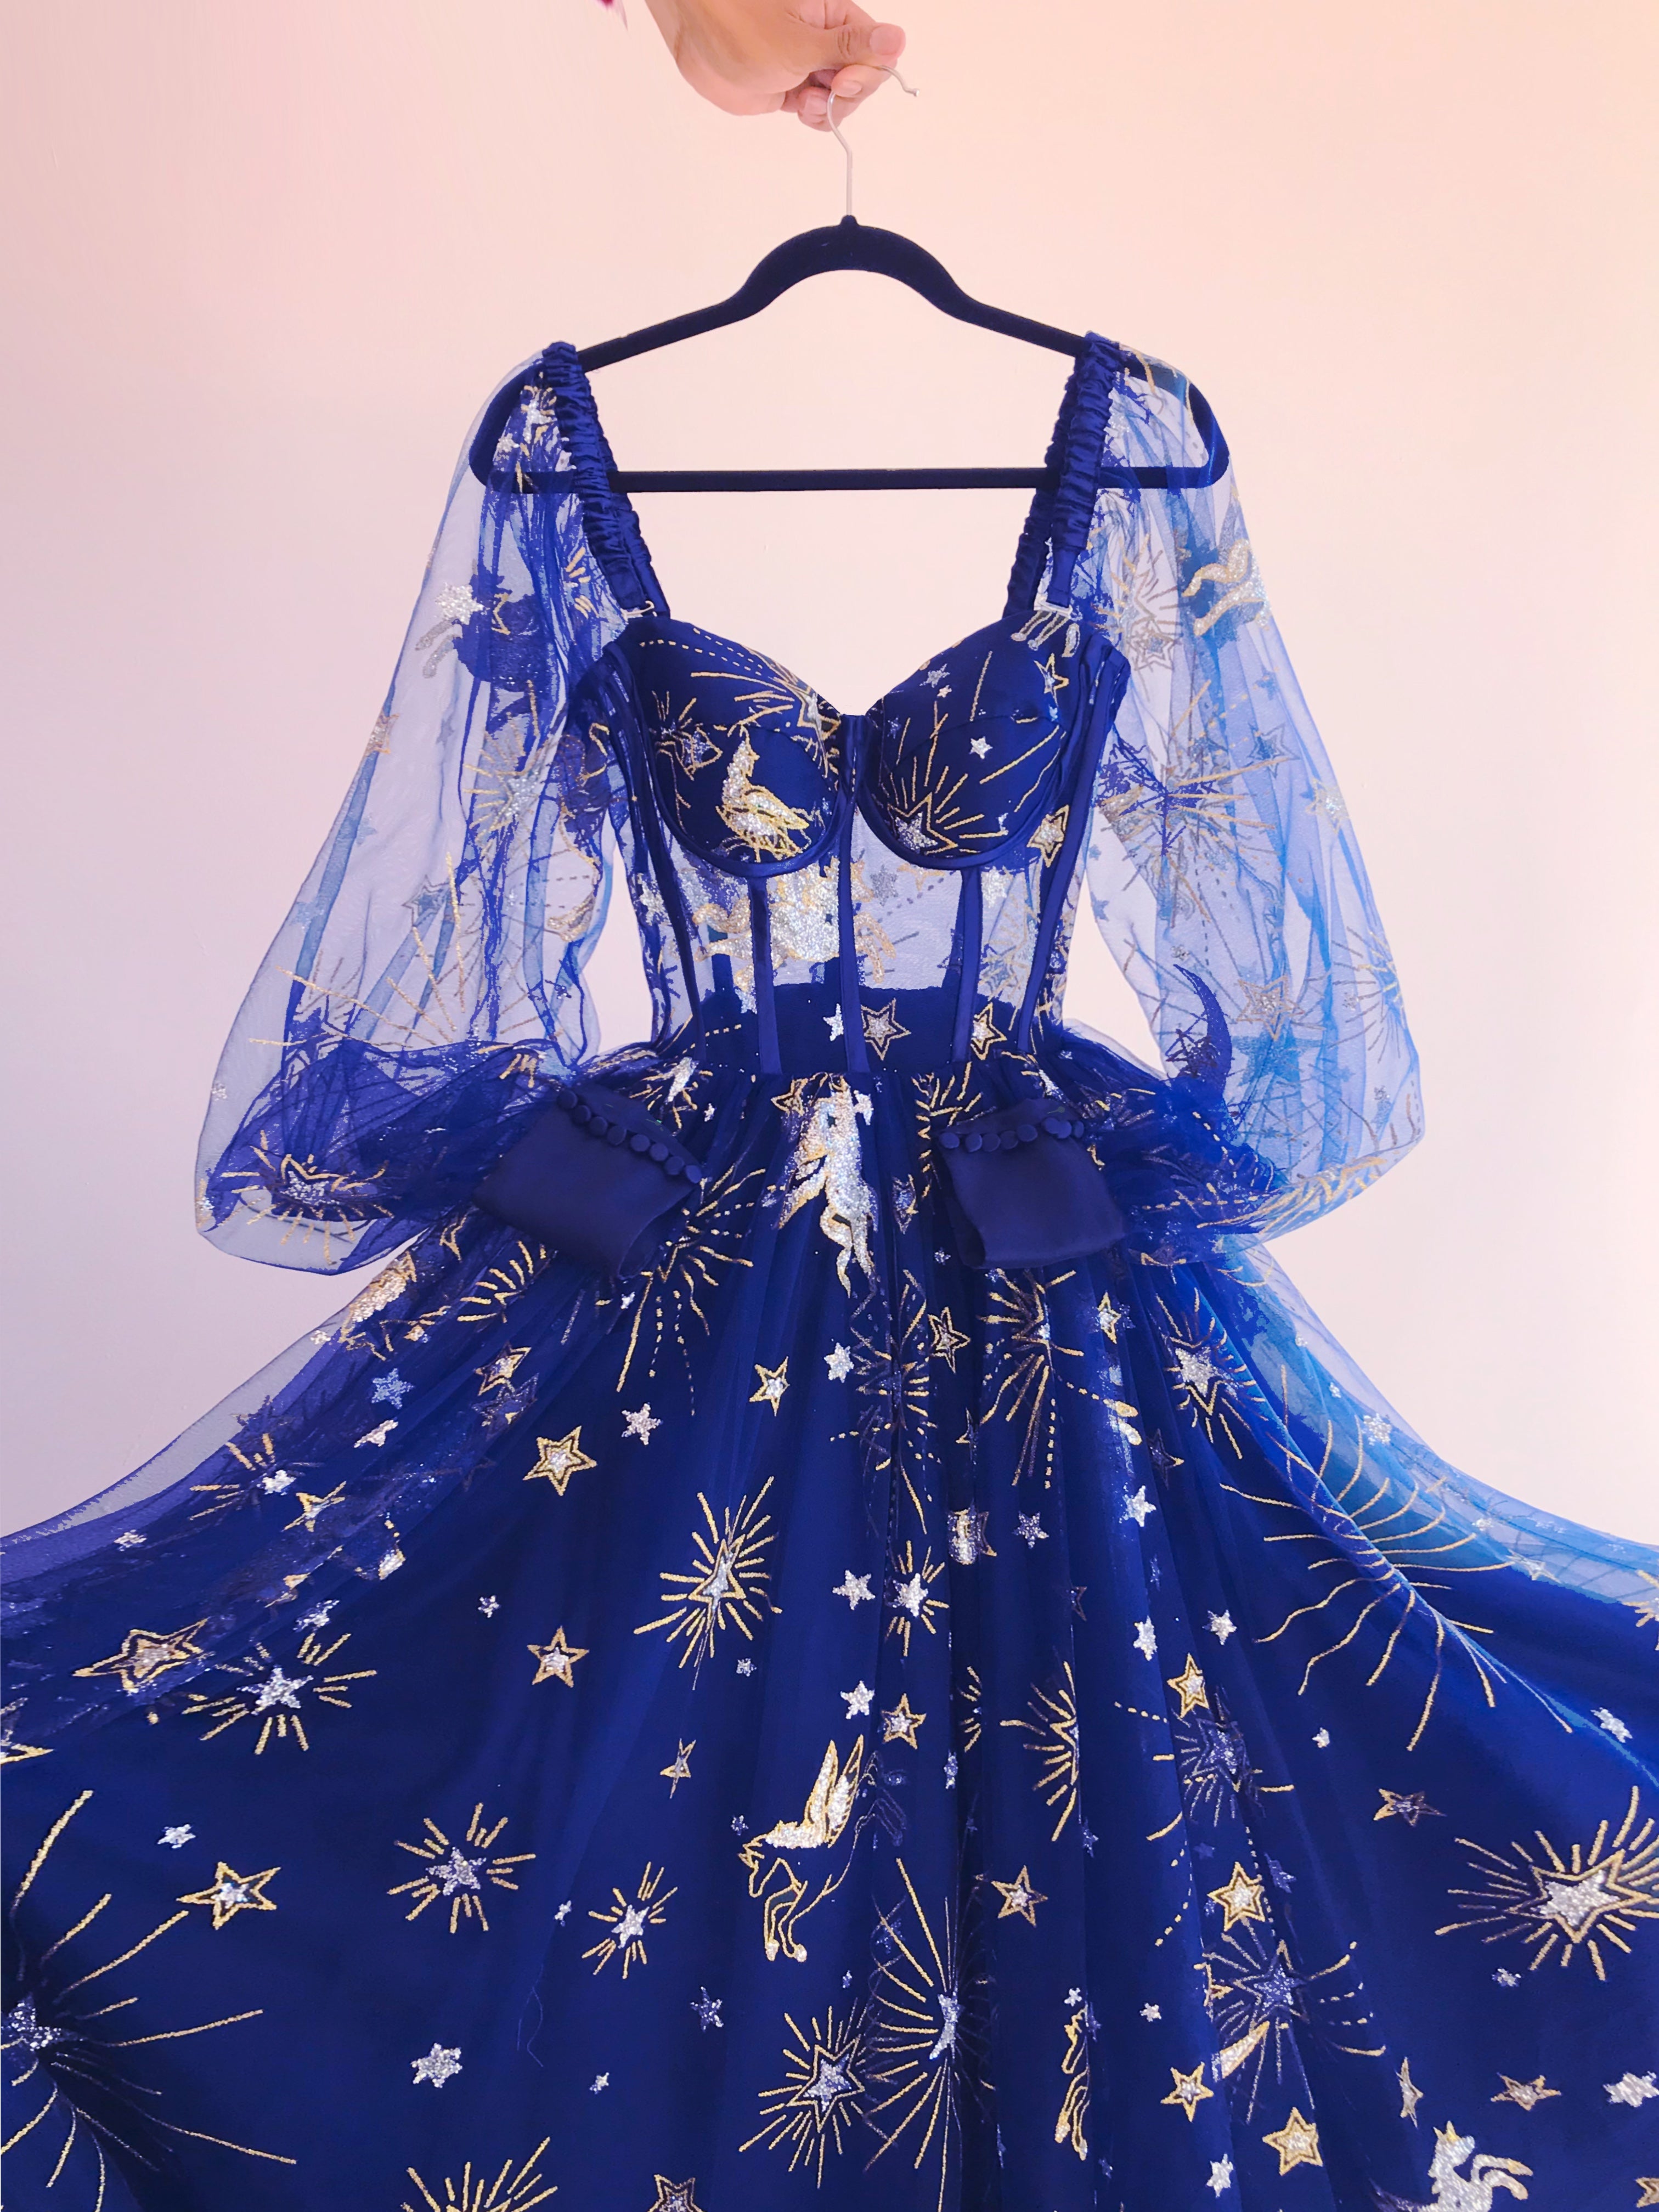 Constellation dress